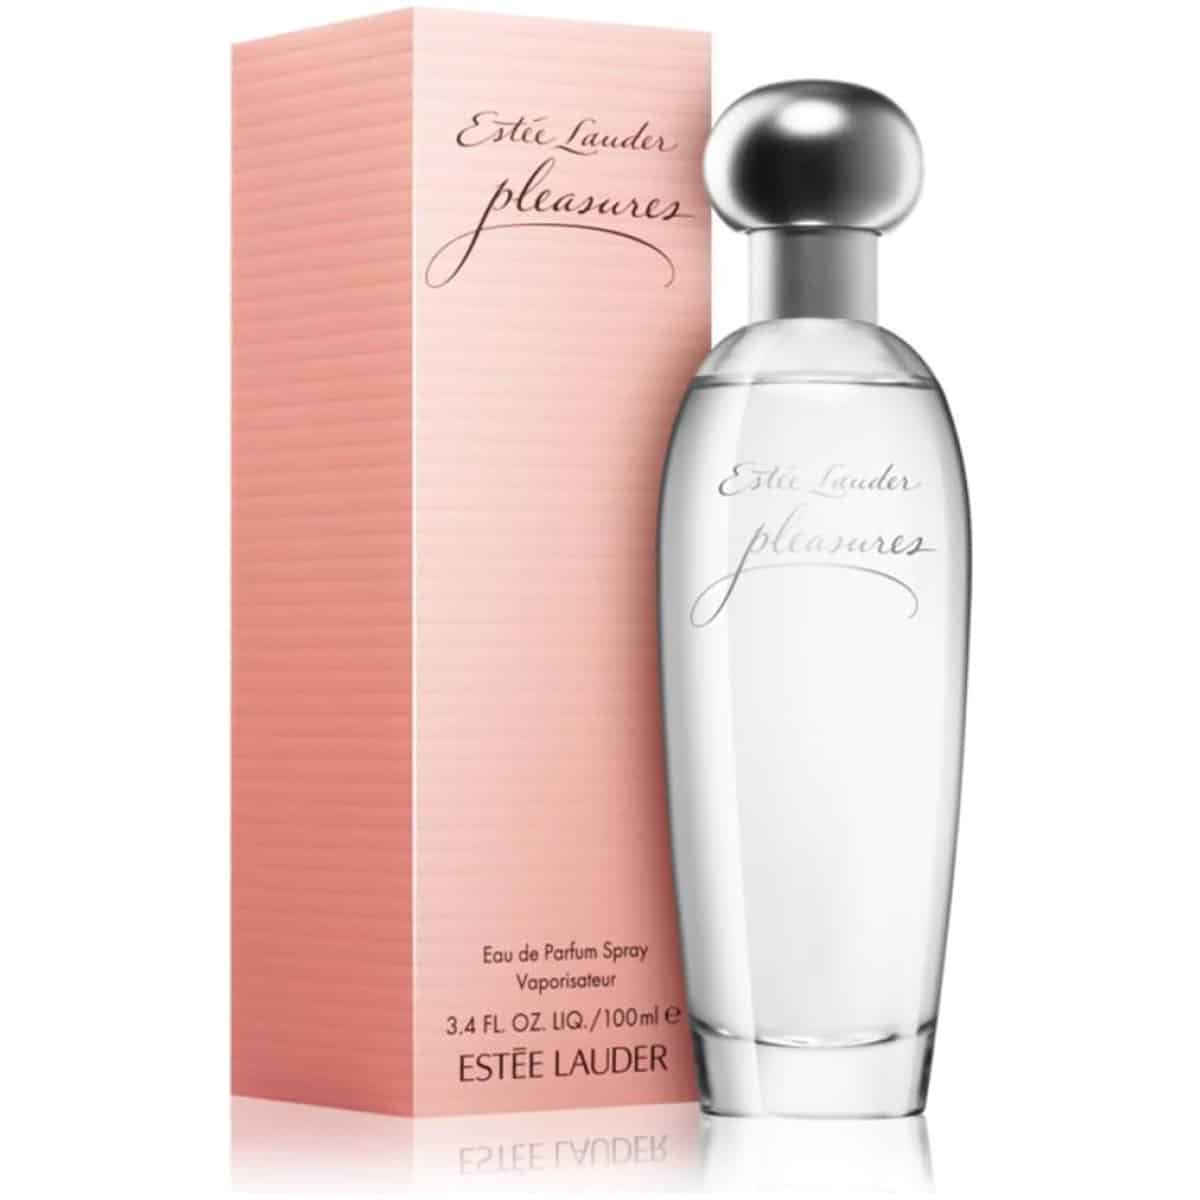 Estee Lauder Pleasure EDP Perfume For Women 100 ml